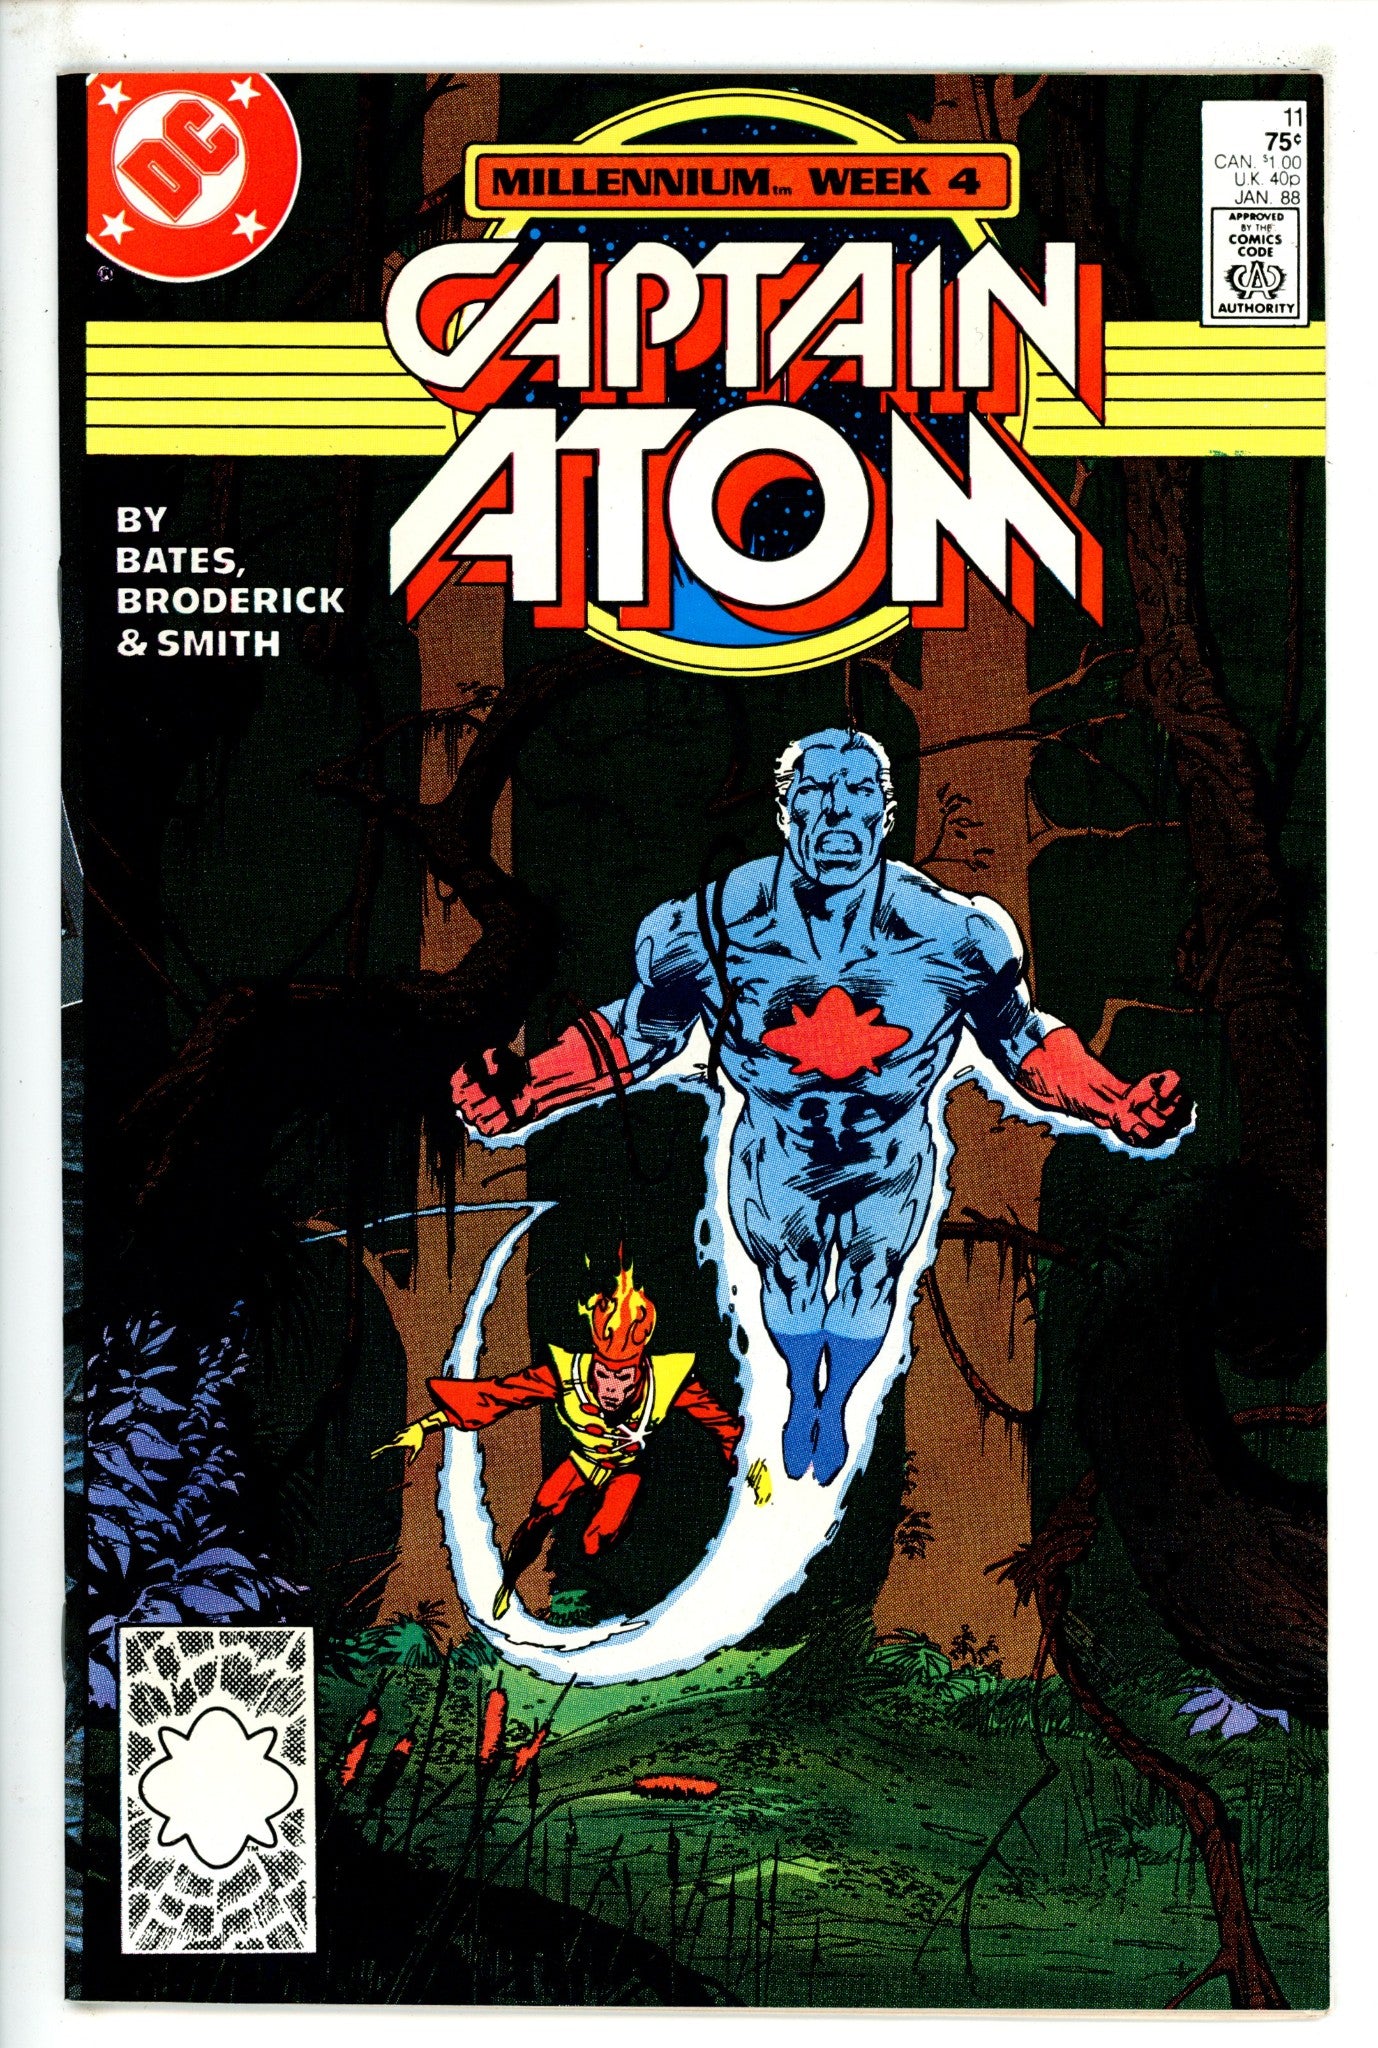 Captain Atom Vol 3 11 (1987)